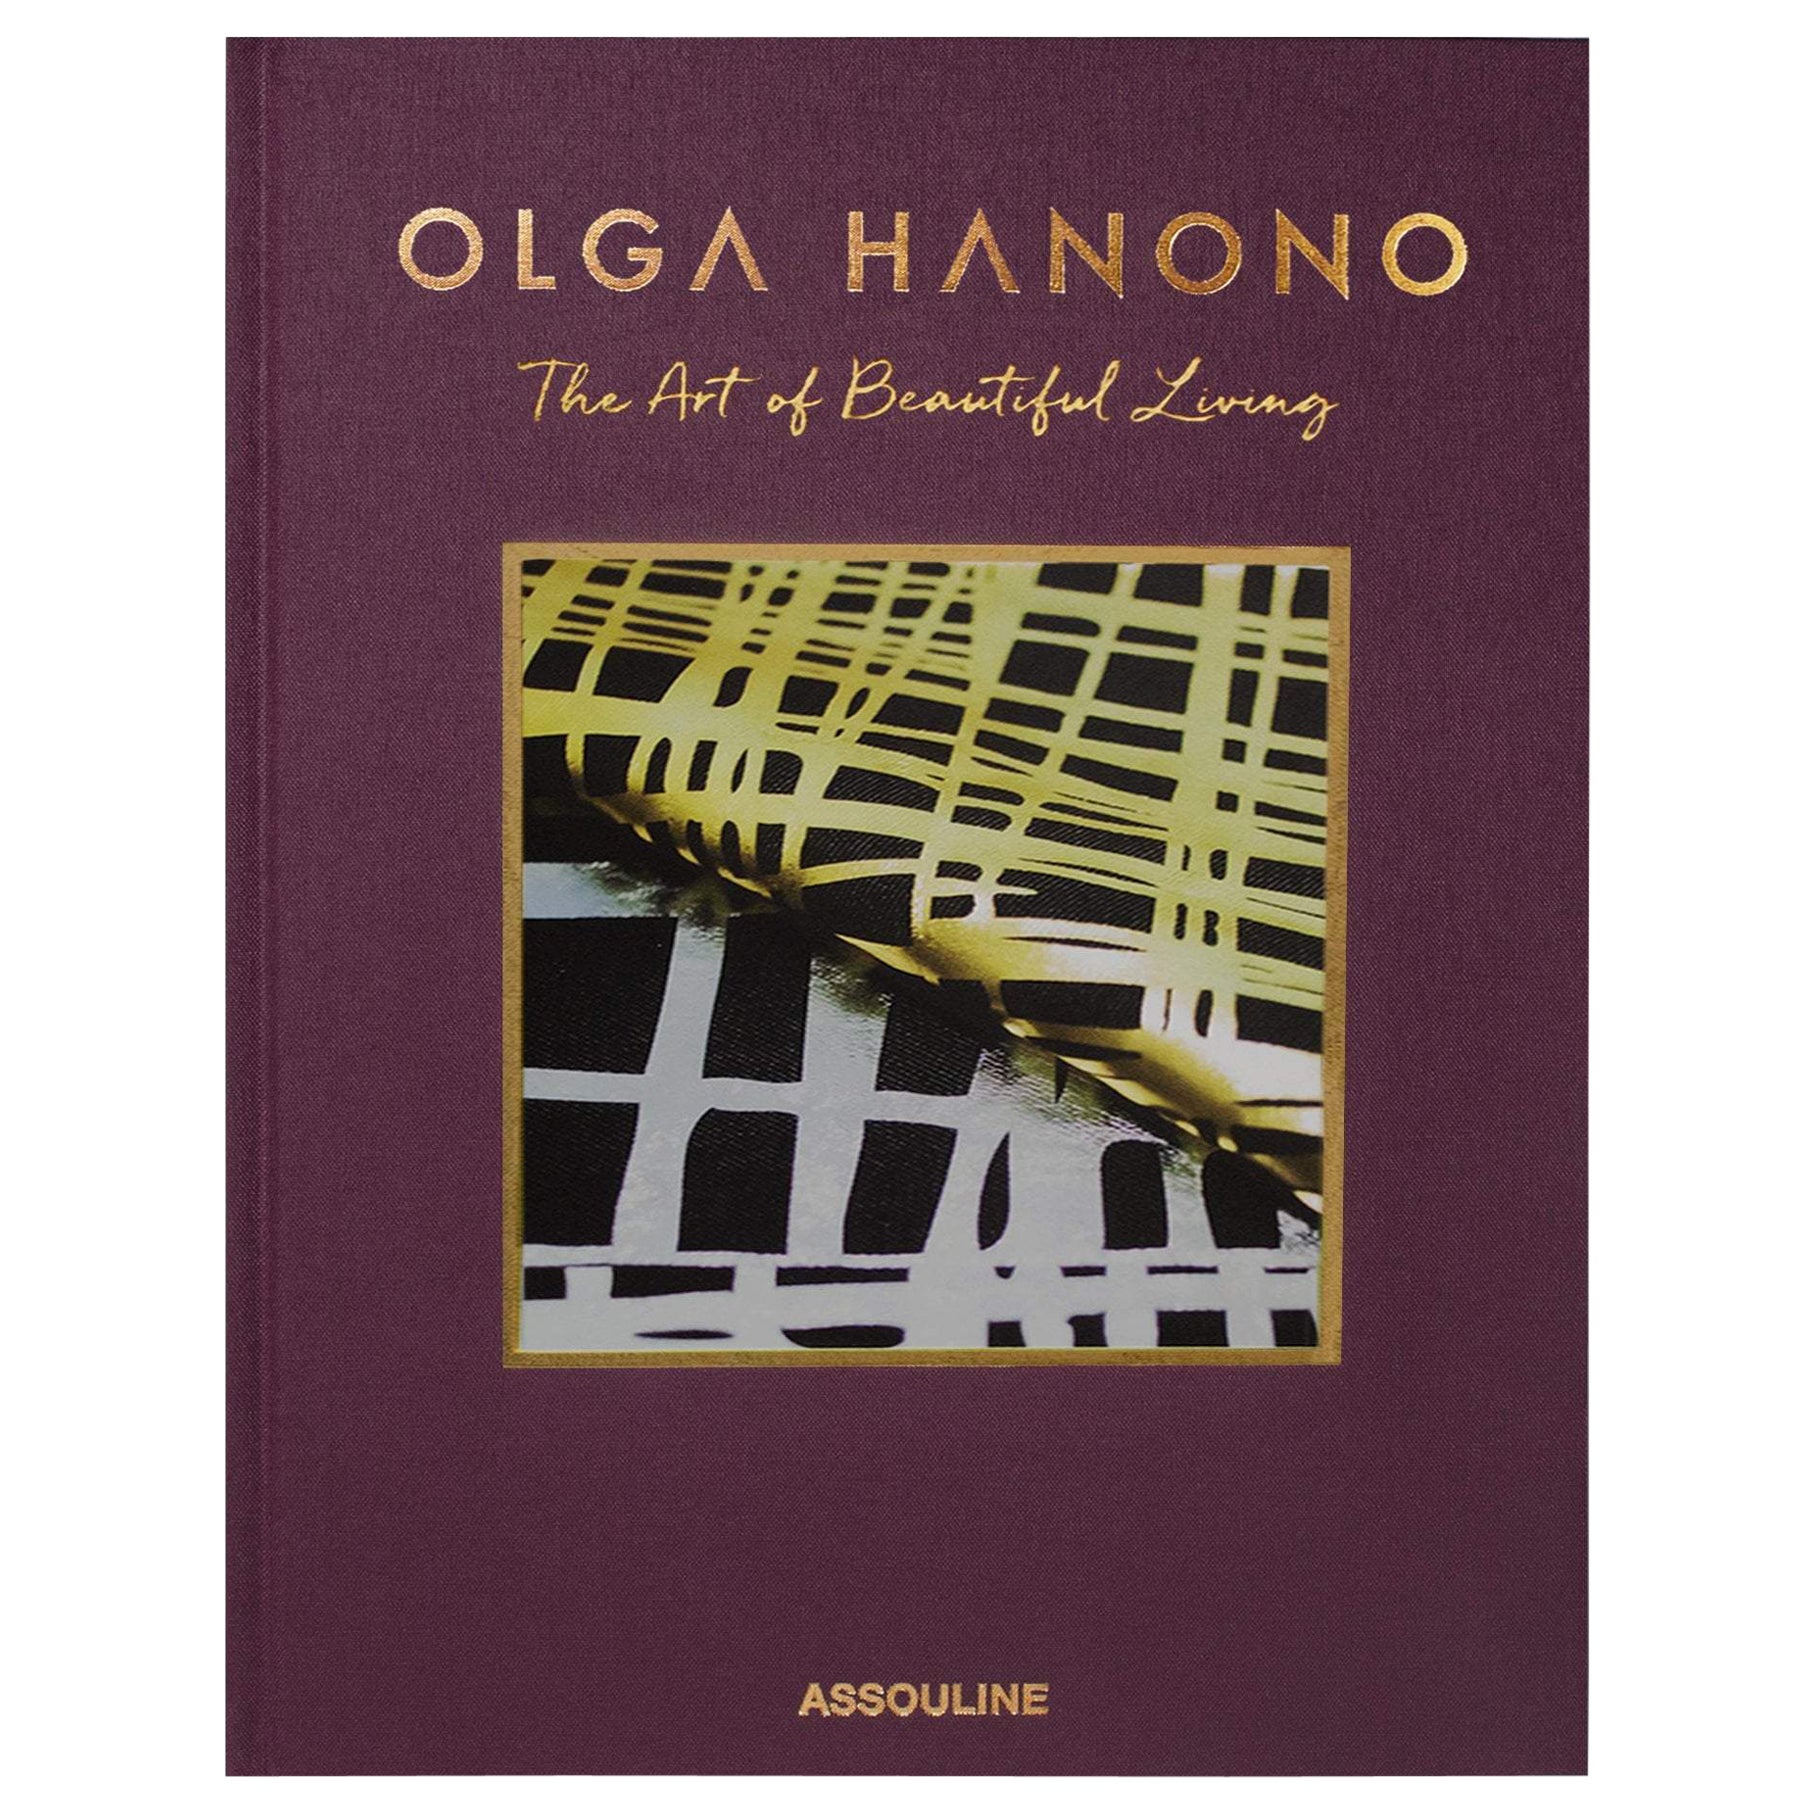 In Stock in Los Angeles, Olga Hanono The Art of Beautiful Living